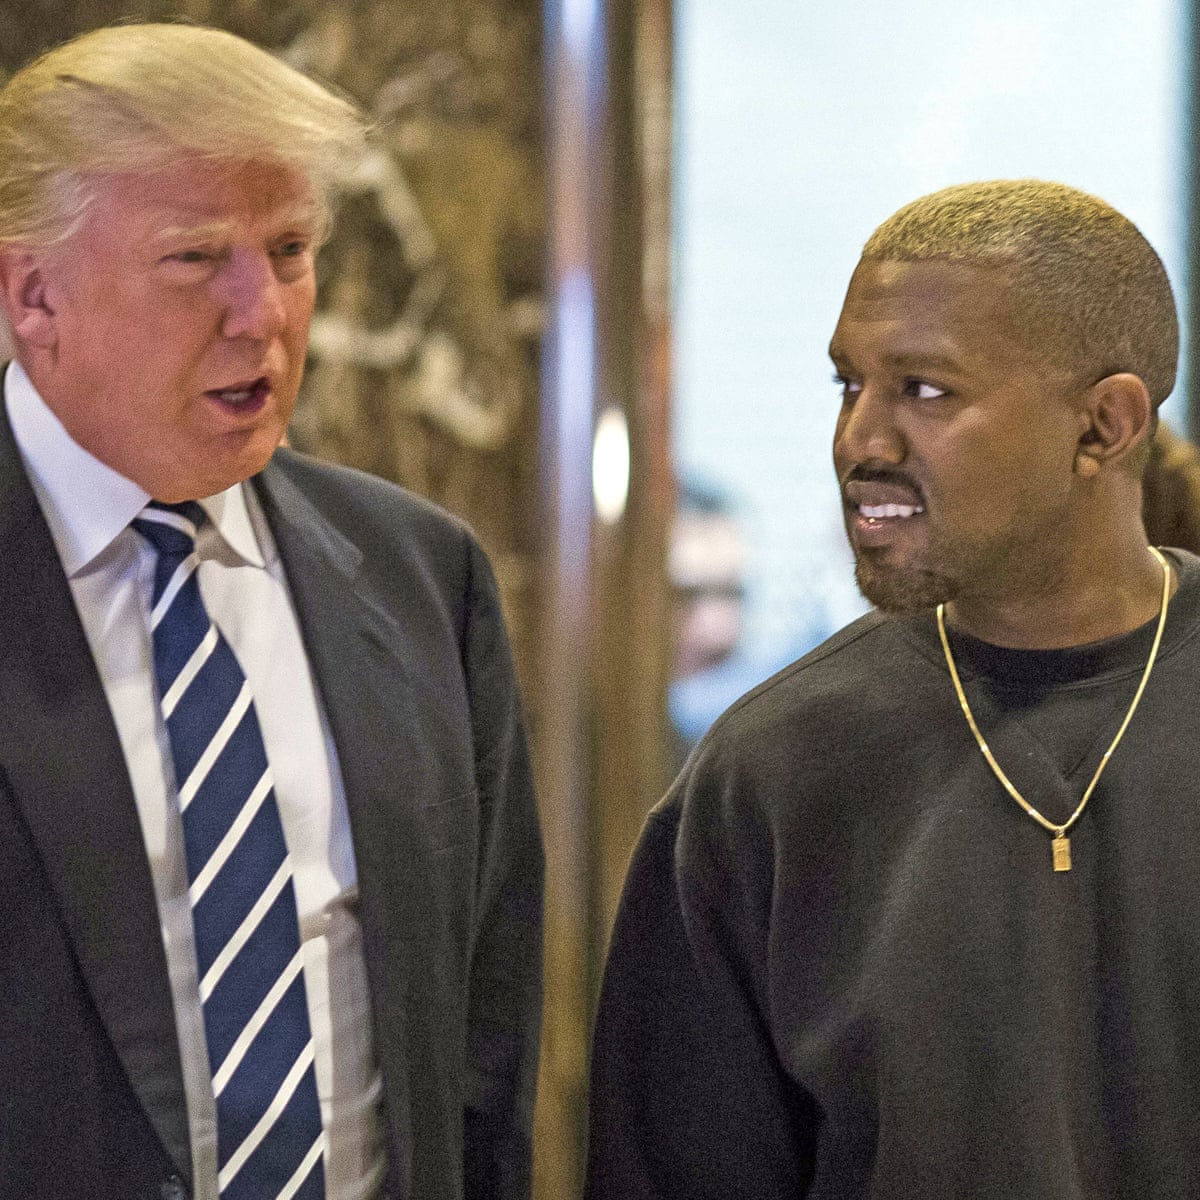 Trump calls Kanye West's presidential bid 'very interesting'